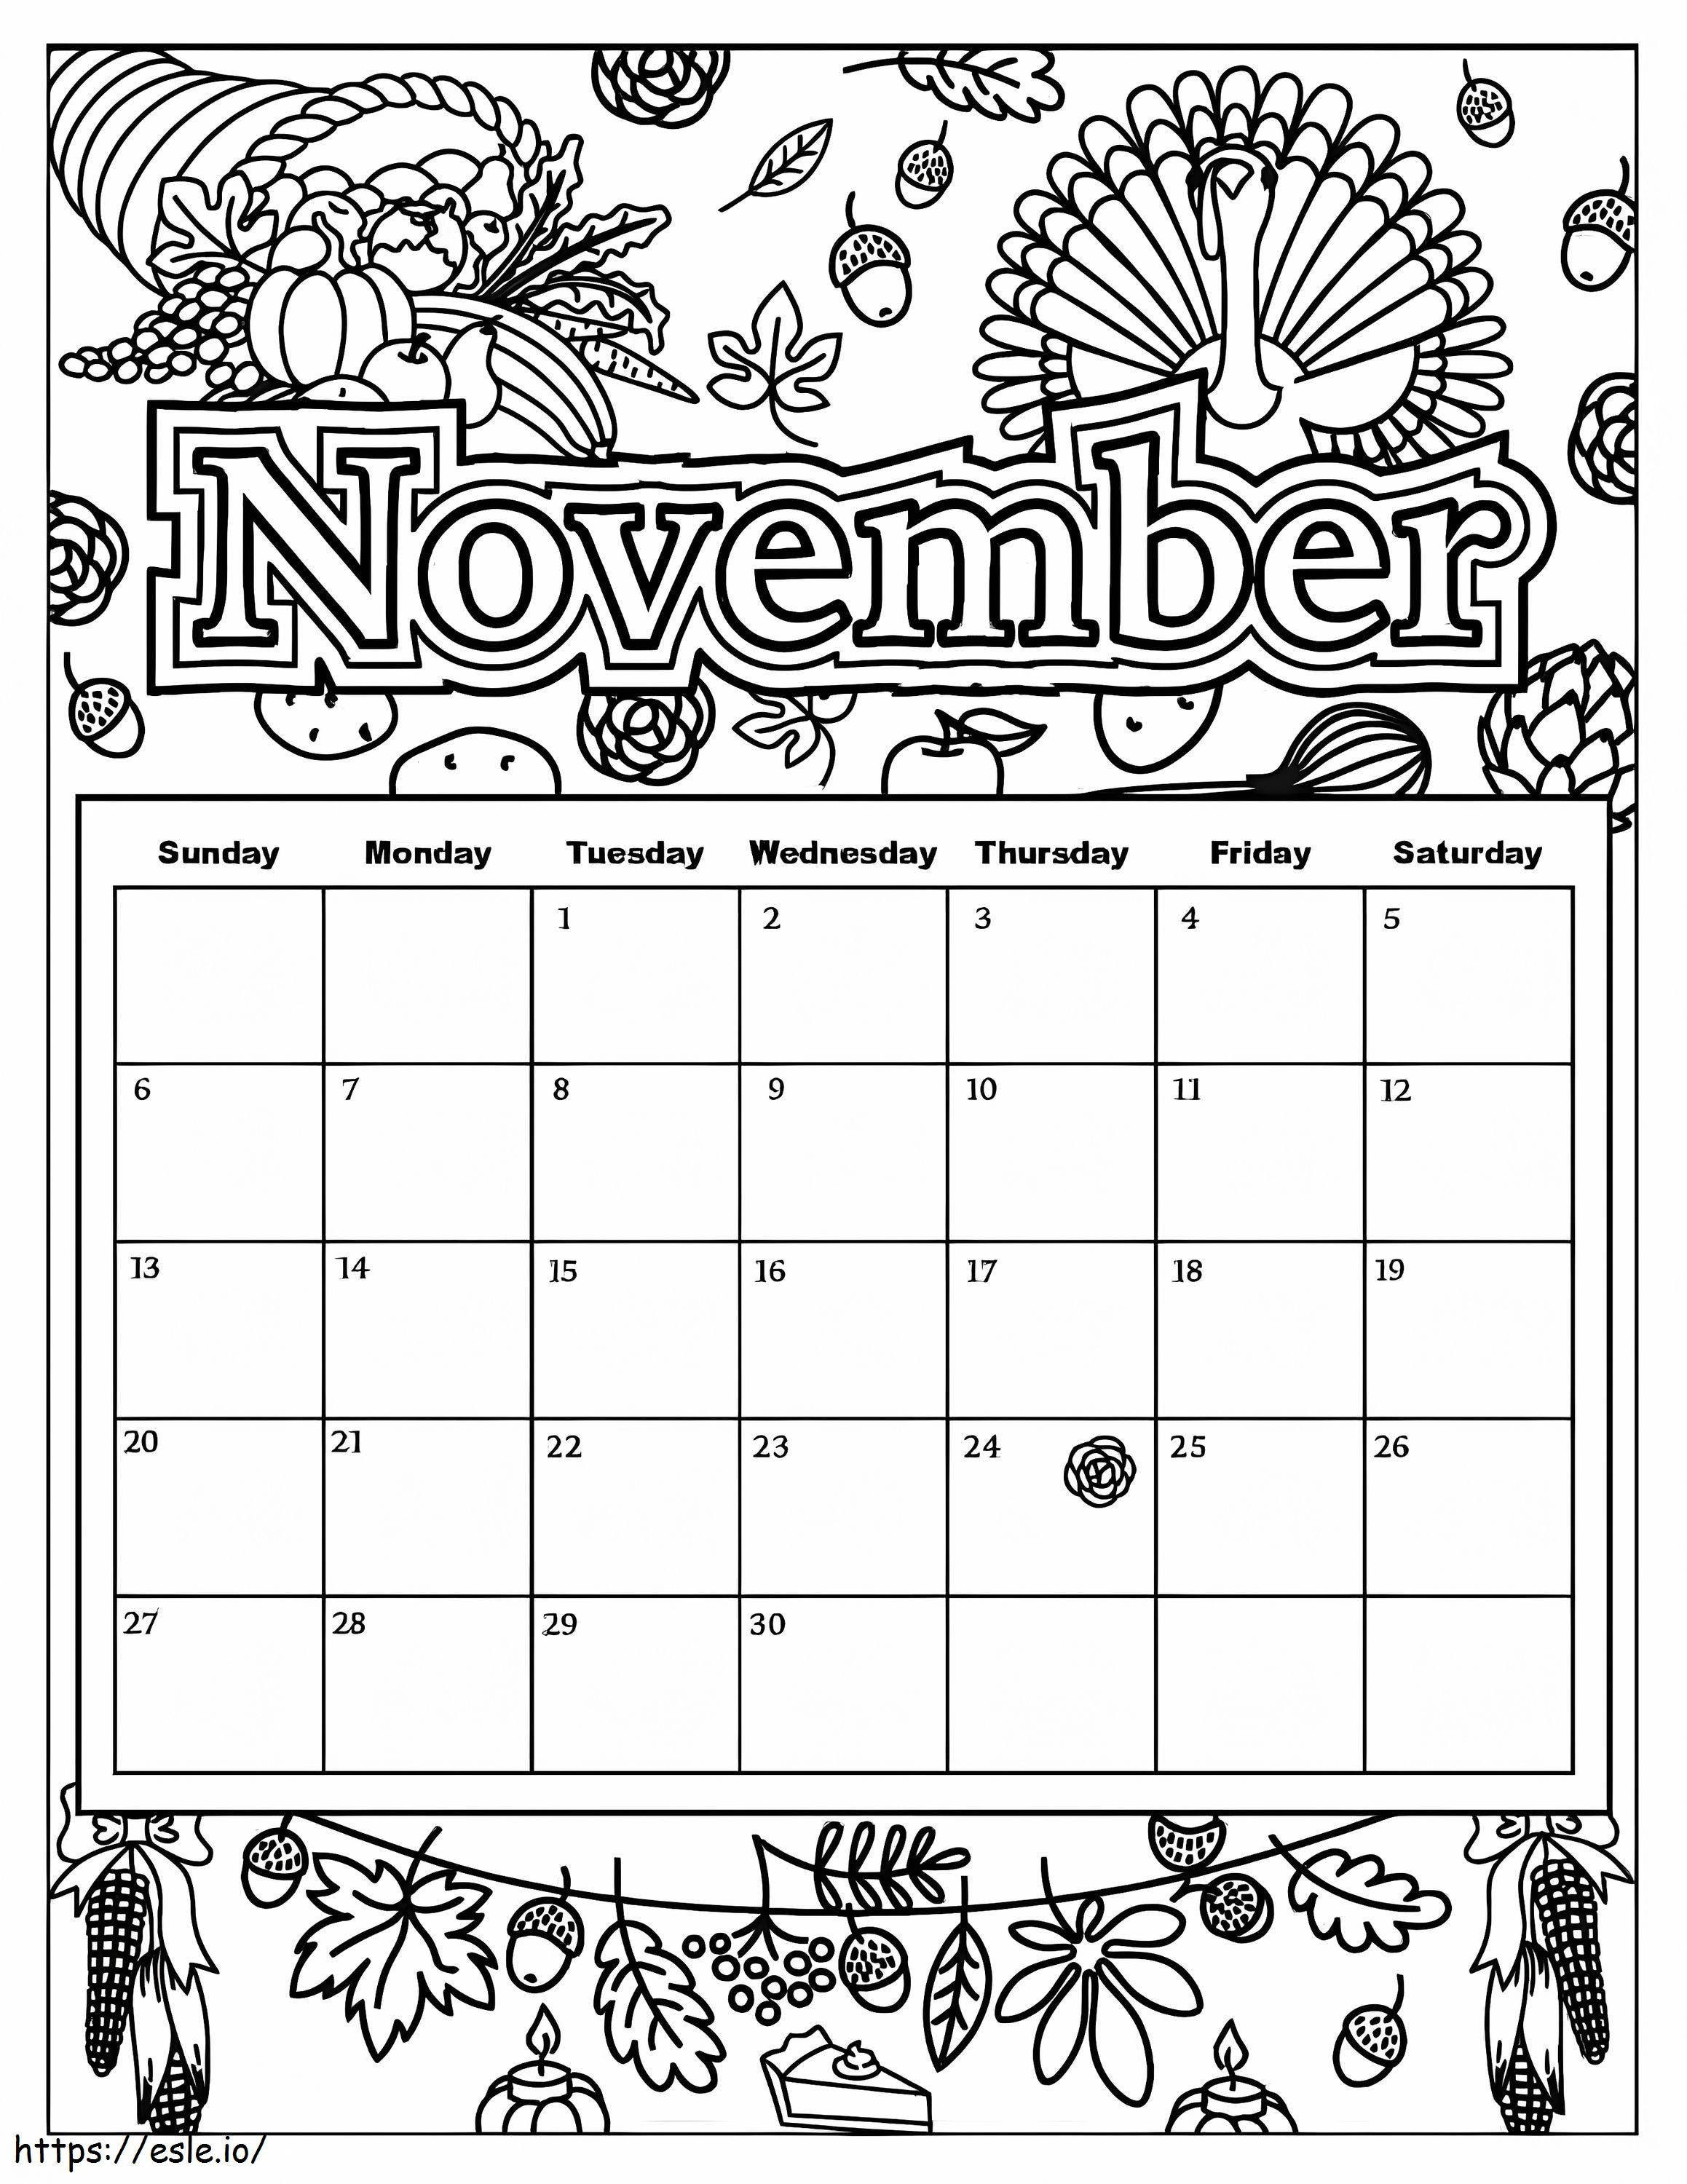 Calendário para novembro bonito para colorir